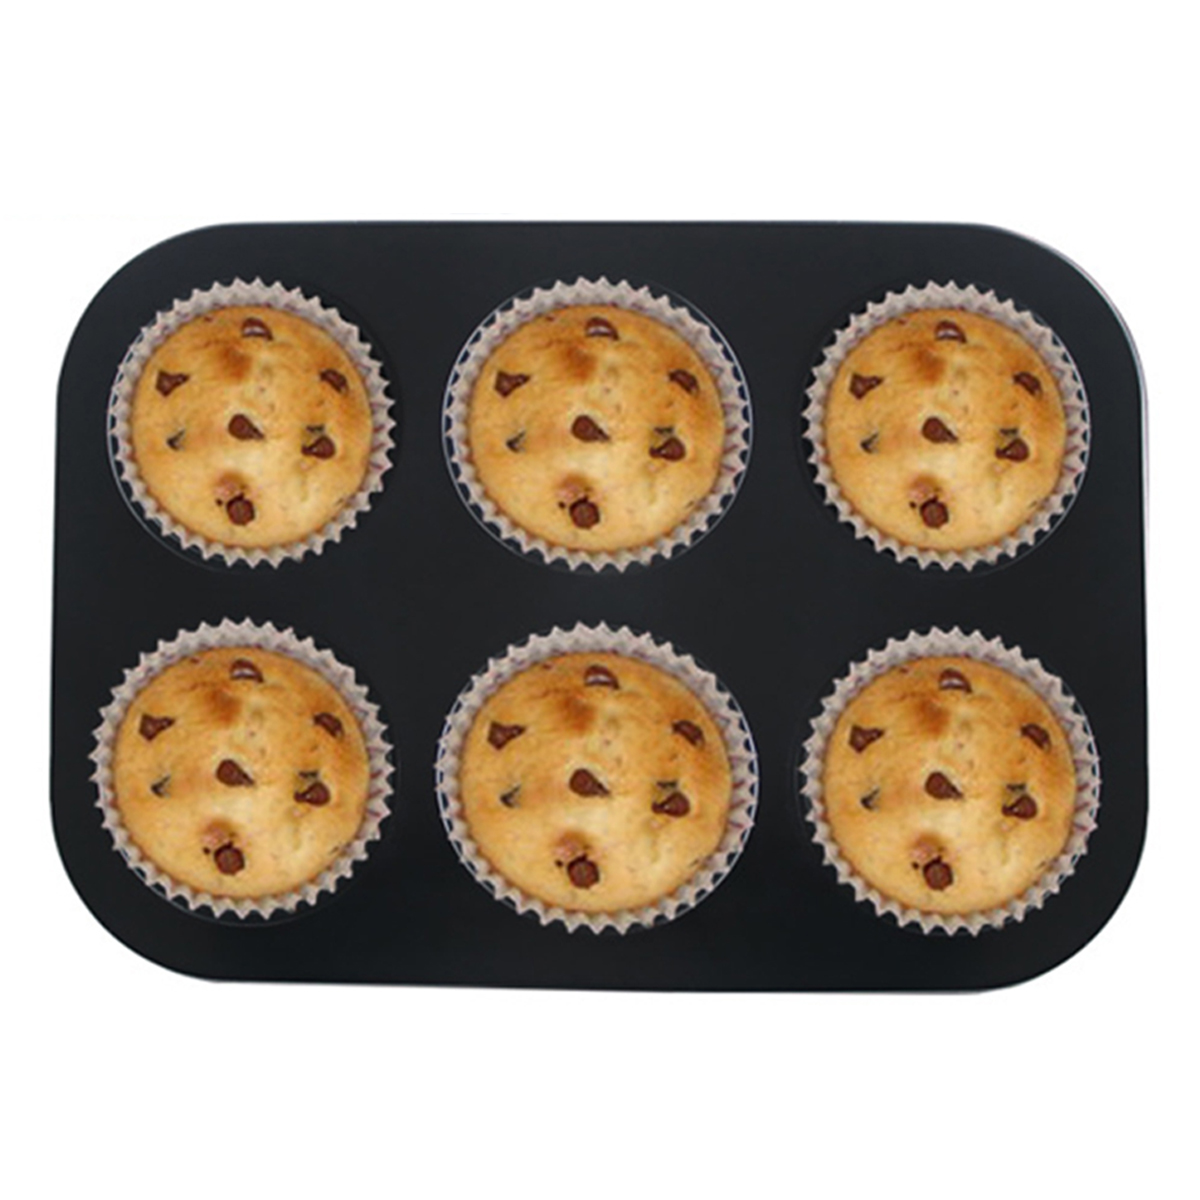 6pc-Muffin-Pan-Baking-Cooking-Tray-Mould-Round-Bake-Cup-Cake-GoldBlack-1502152-4